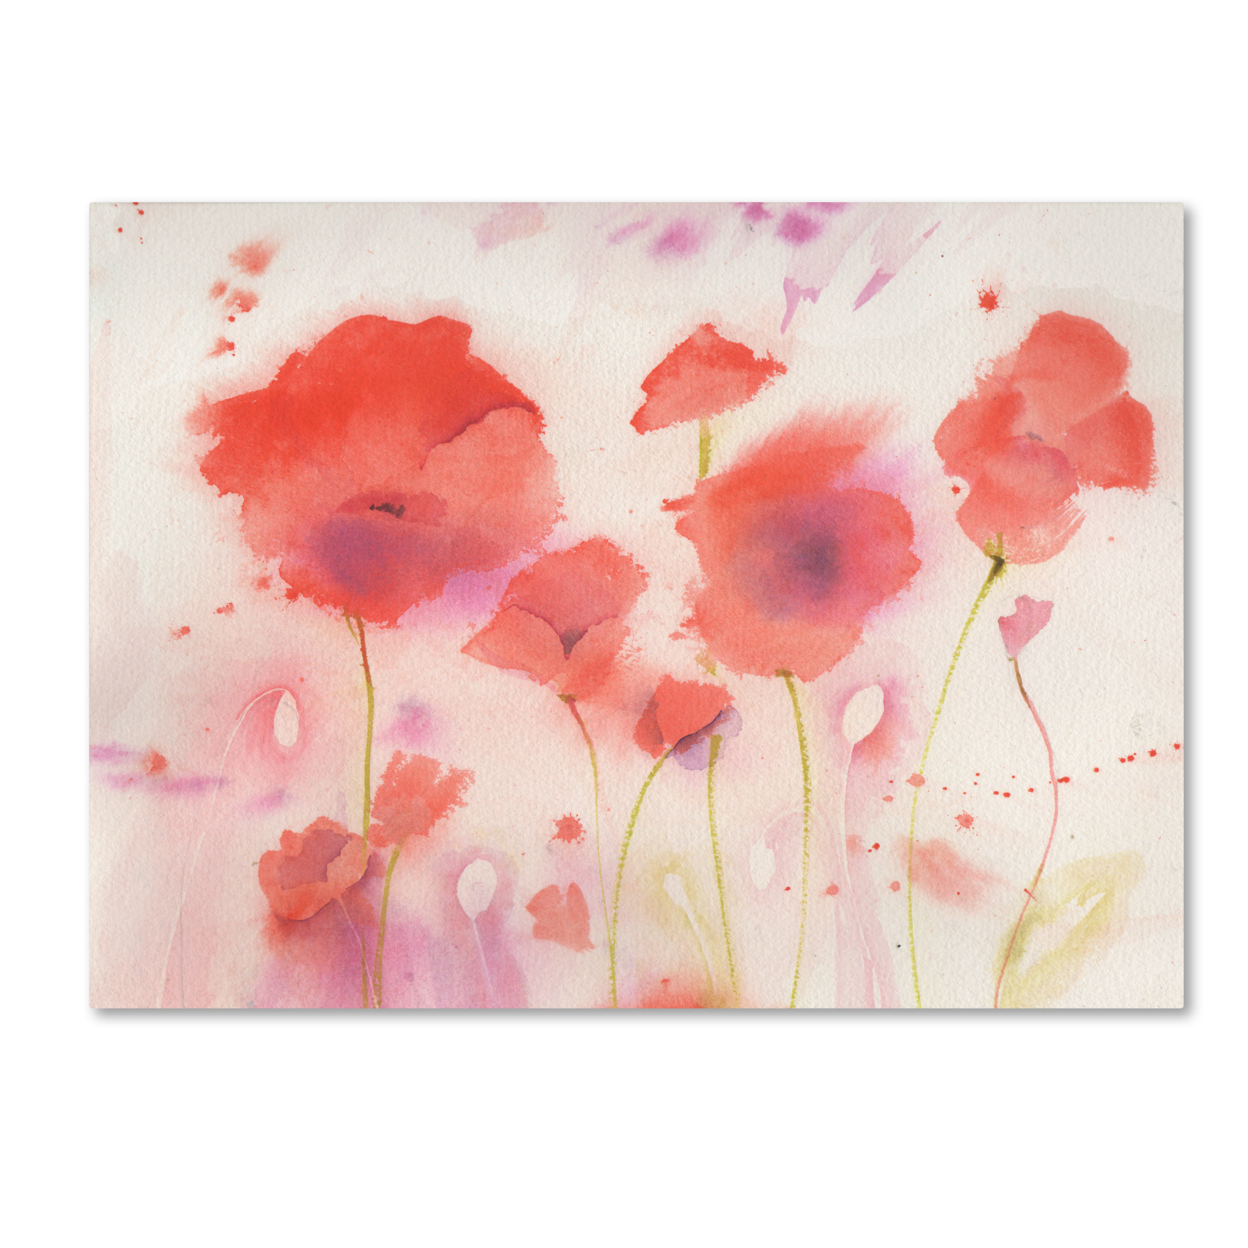 Sheila Golden 'Poppy Memory' Canvas Wall Art 35 X 47 Inches